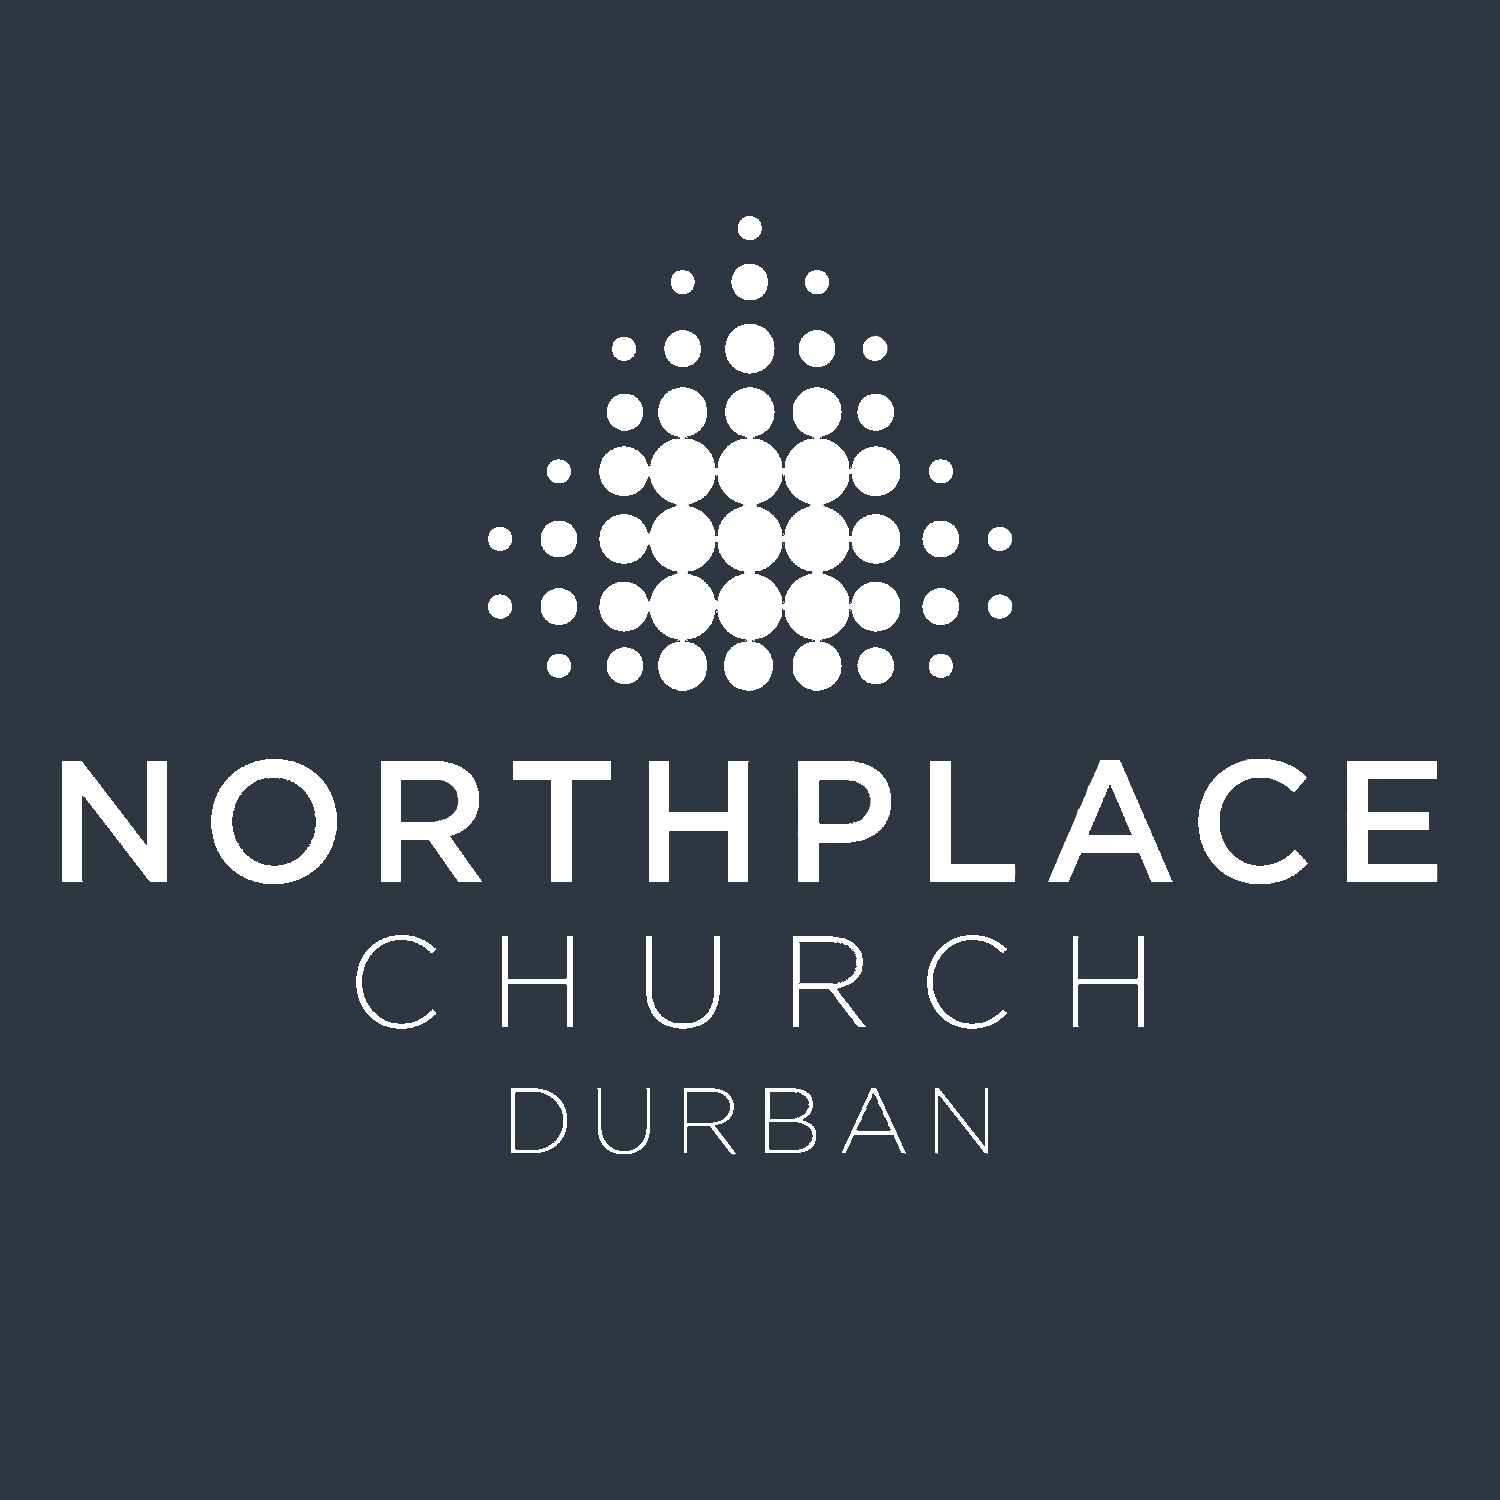 Northplace Church Durban